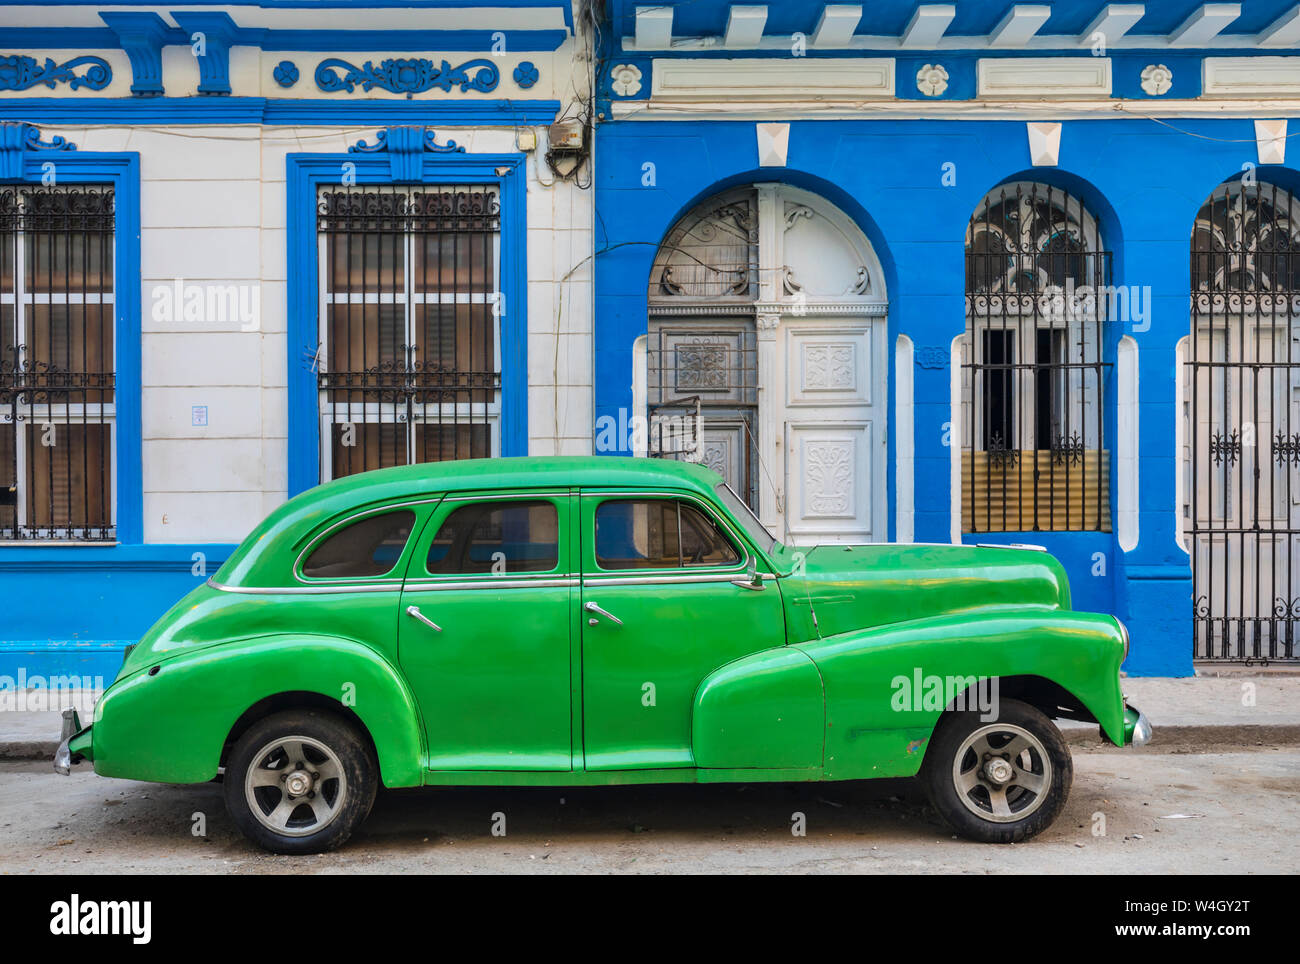 Parked freen vintage car, Havana, Cuba Stock Photo